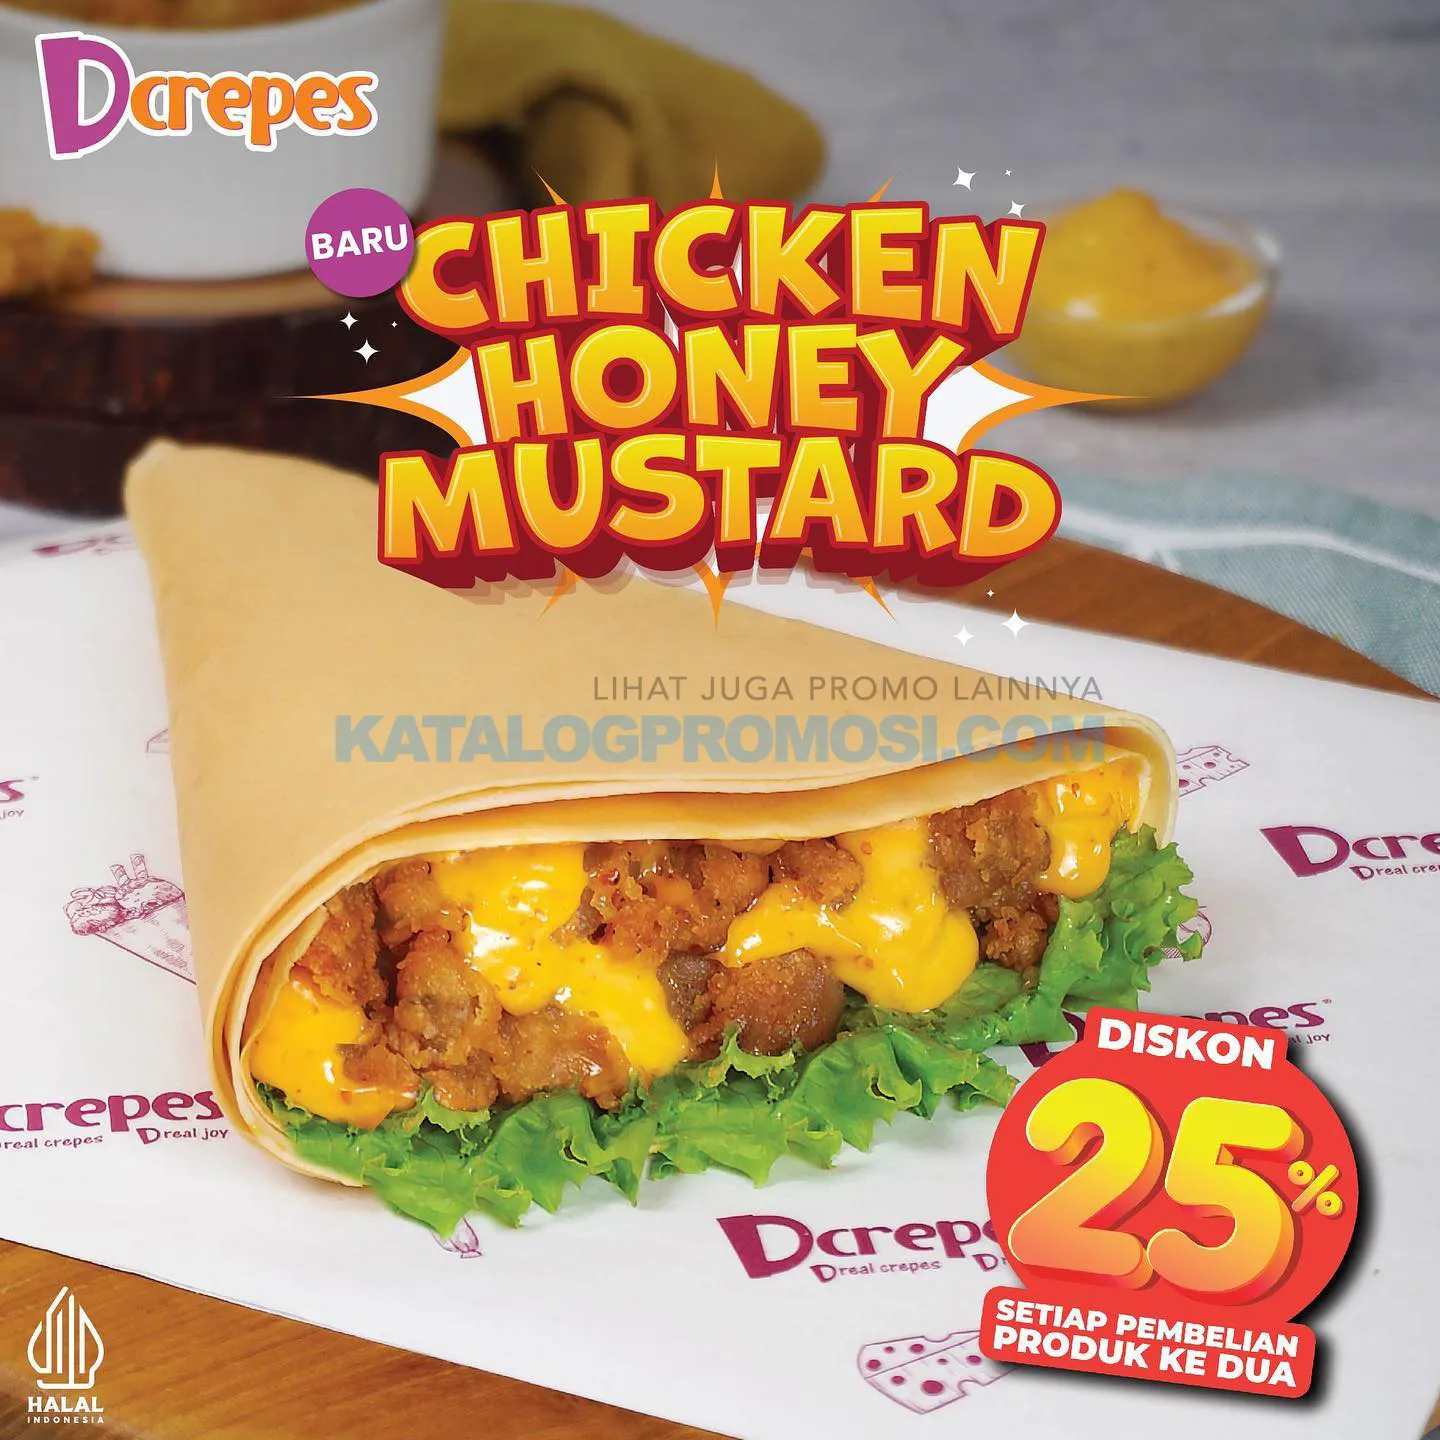 Promo DCREPES Menu Baru - Chicken Honey Mustard ! Diskon 25% untuk pembelian ke dua